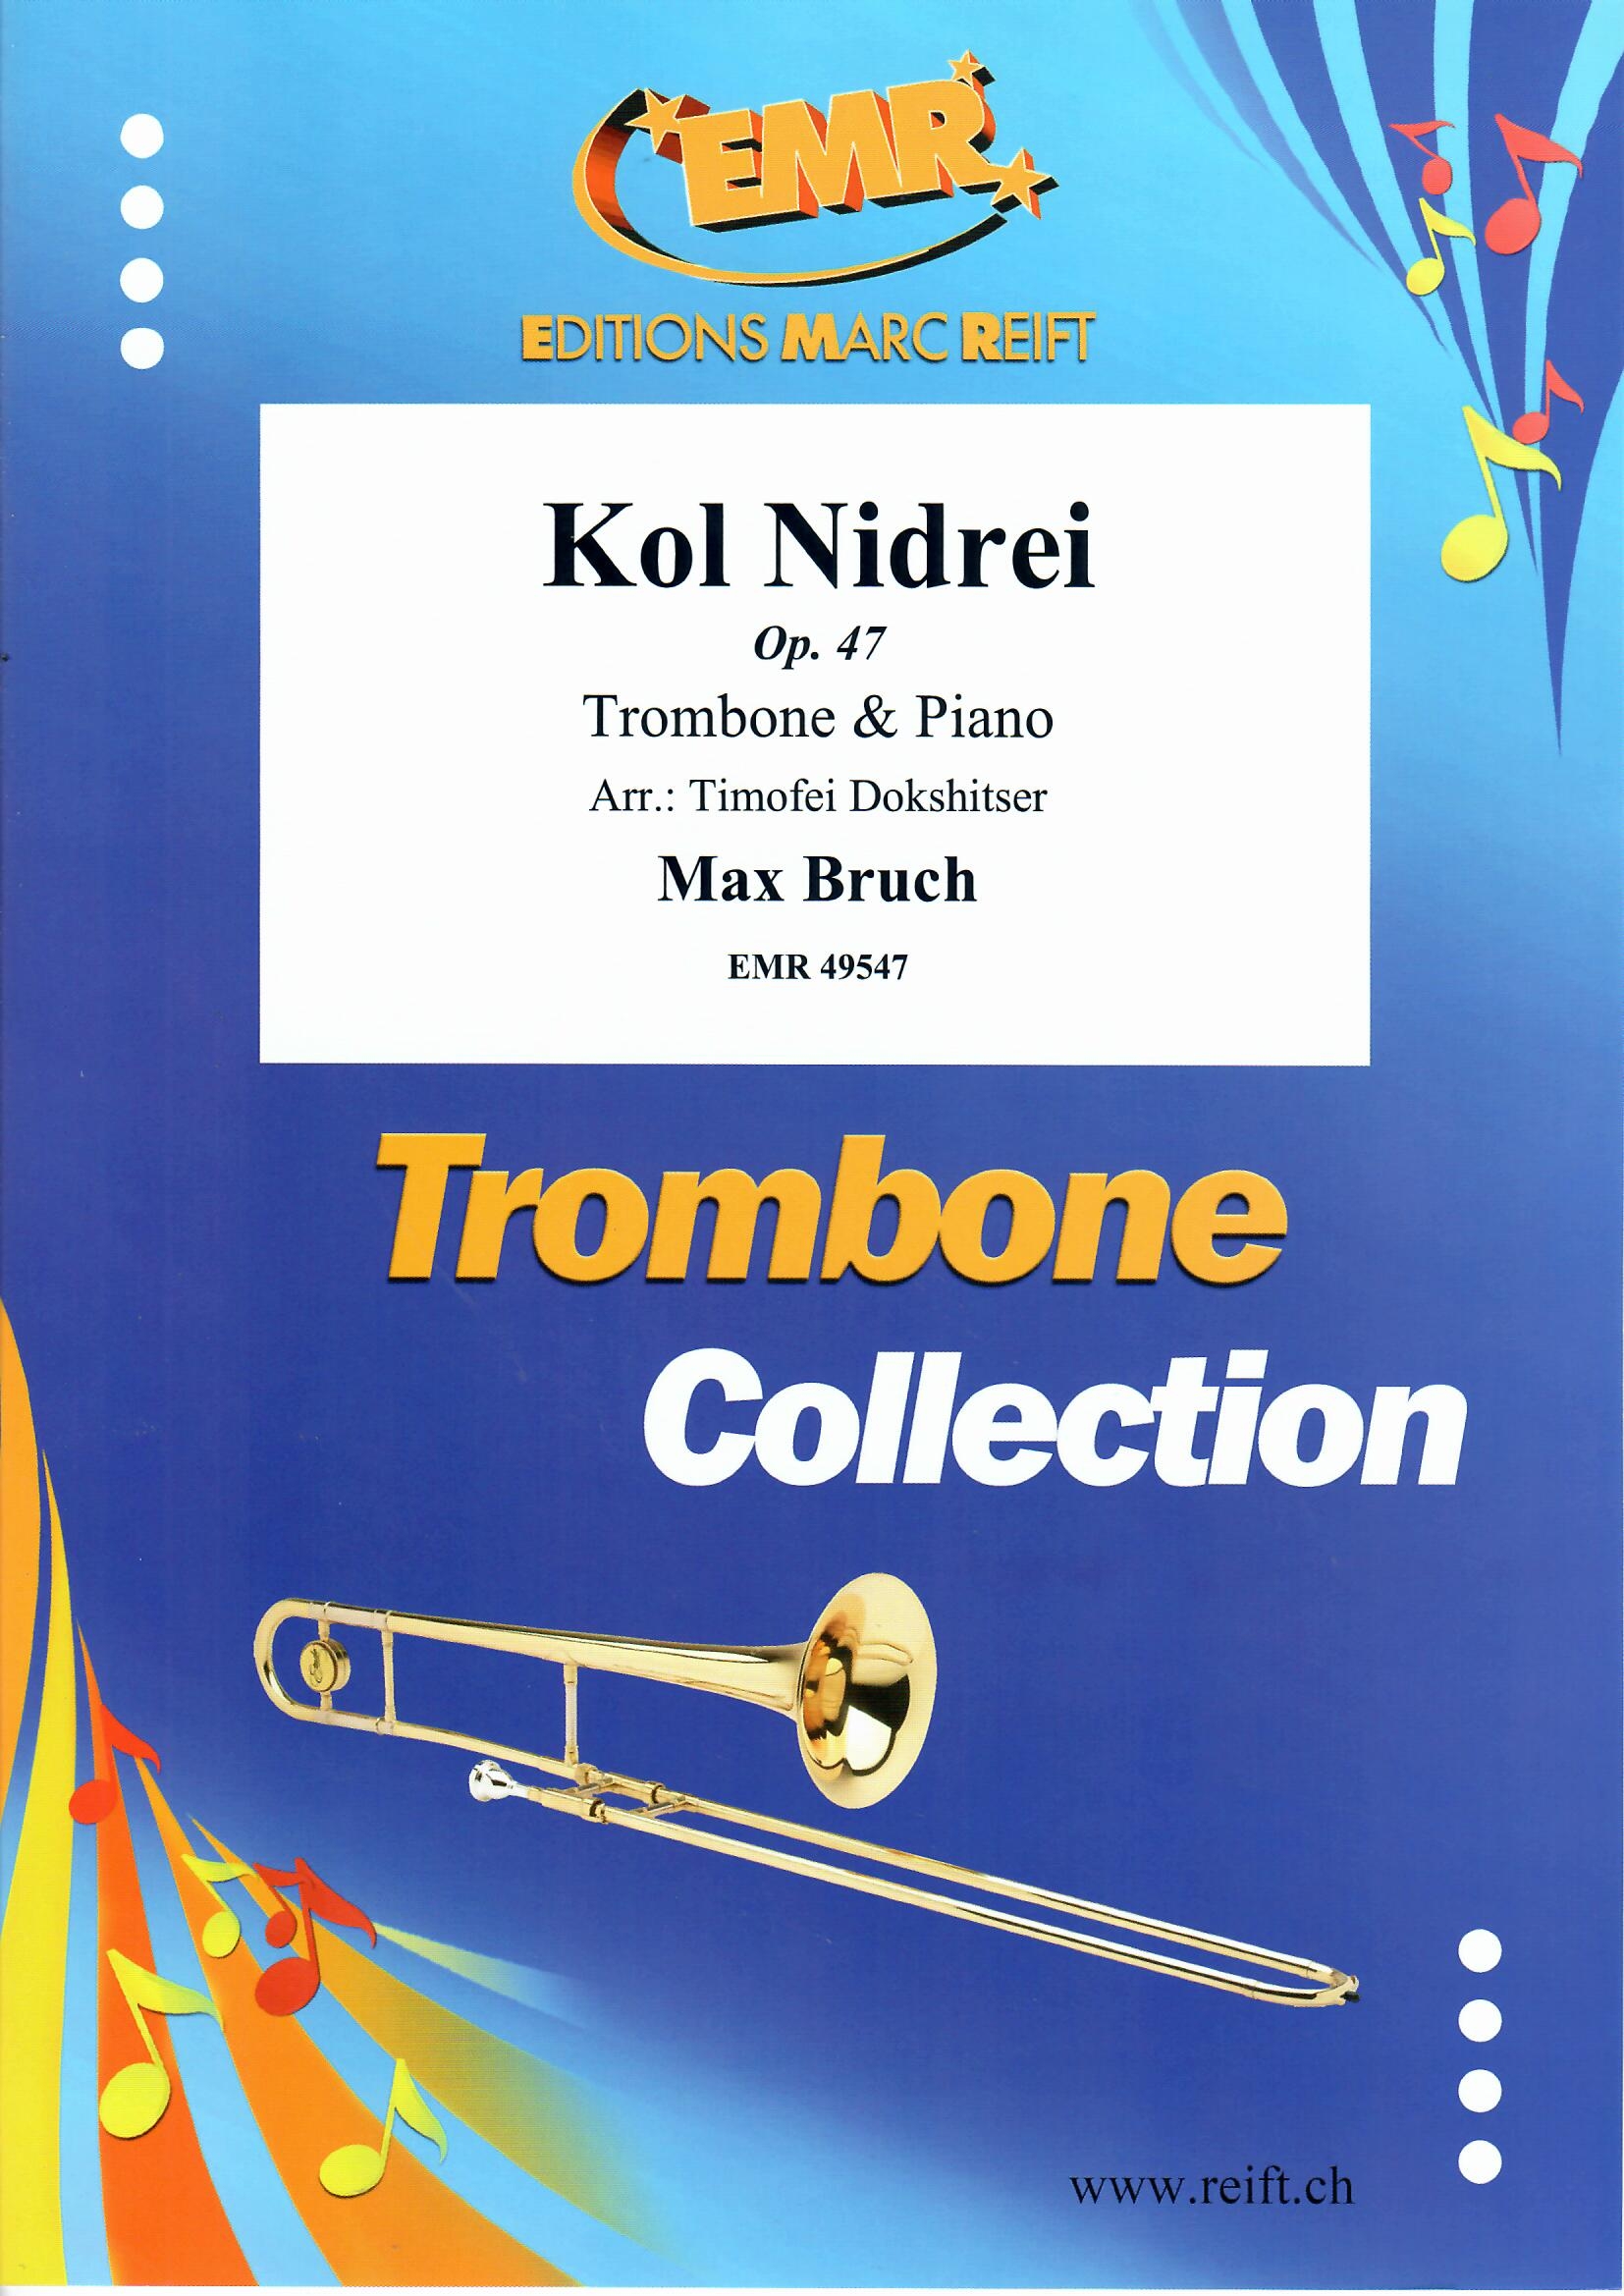 KOL NIDREI - Trombone & Piano, SOLOS - Trombone